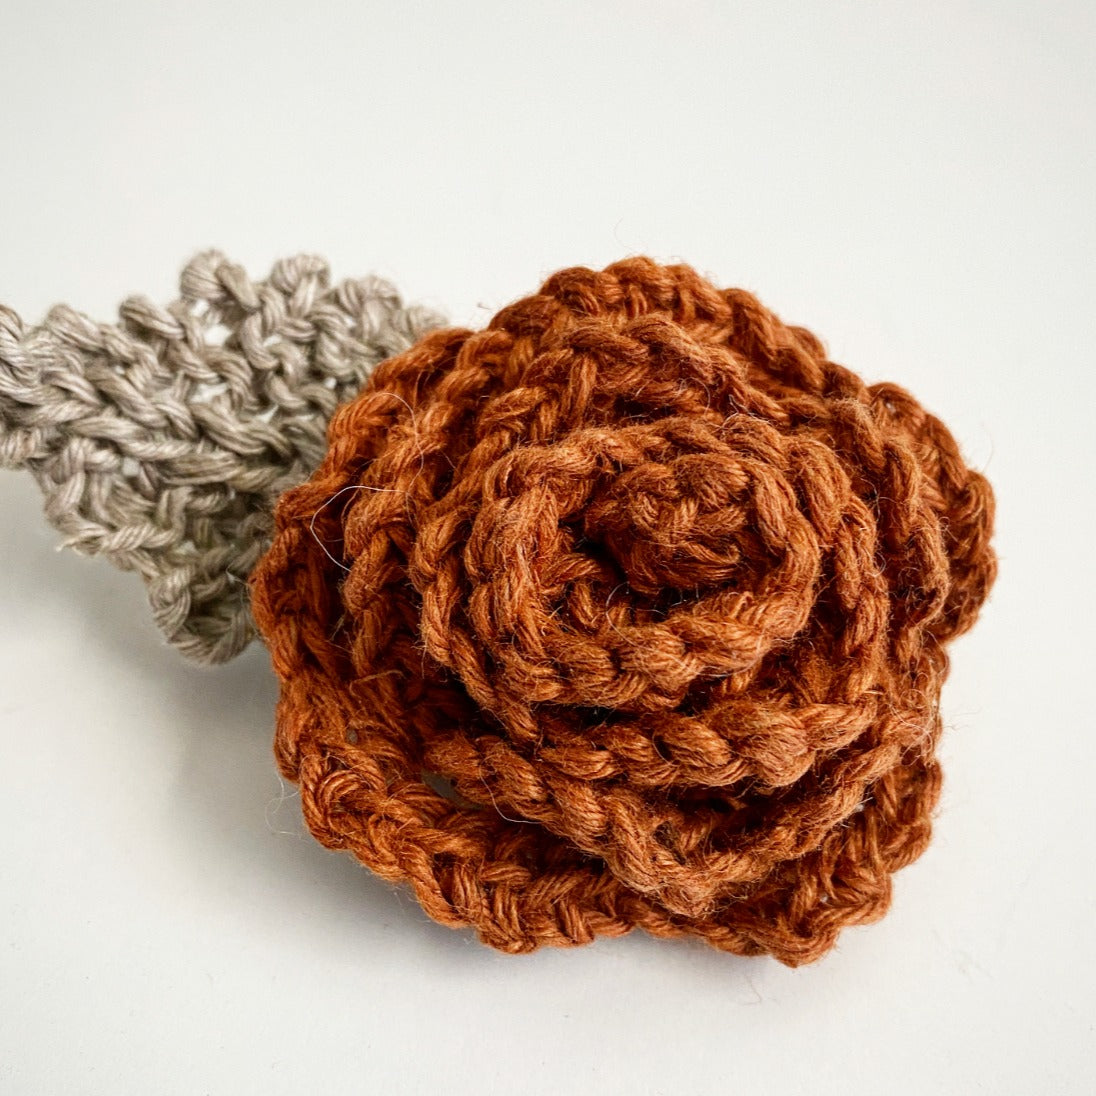 Knit Rose & Leaf Pattern & VIDEO